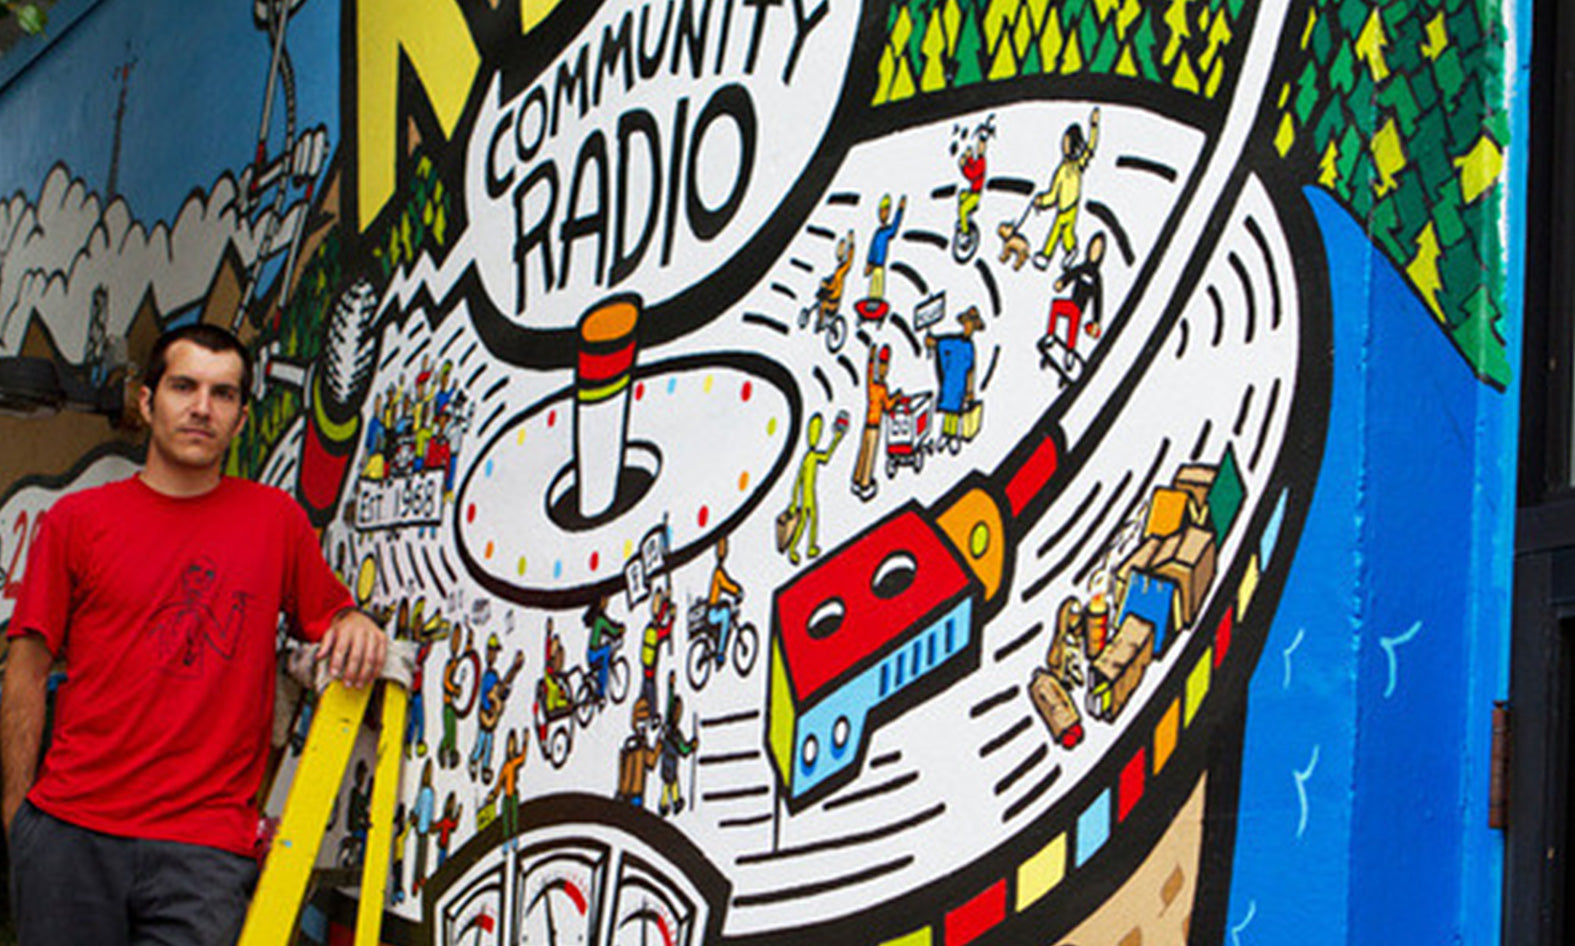 KBOO Community Radio Mural - Portland, OR